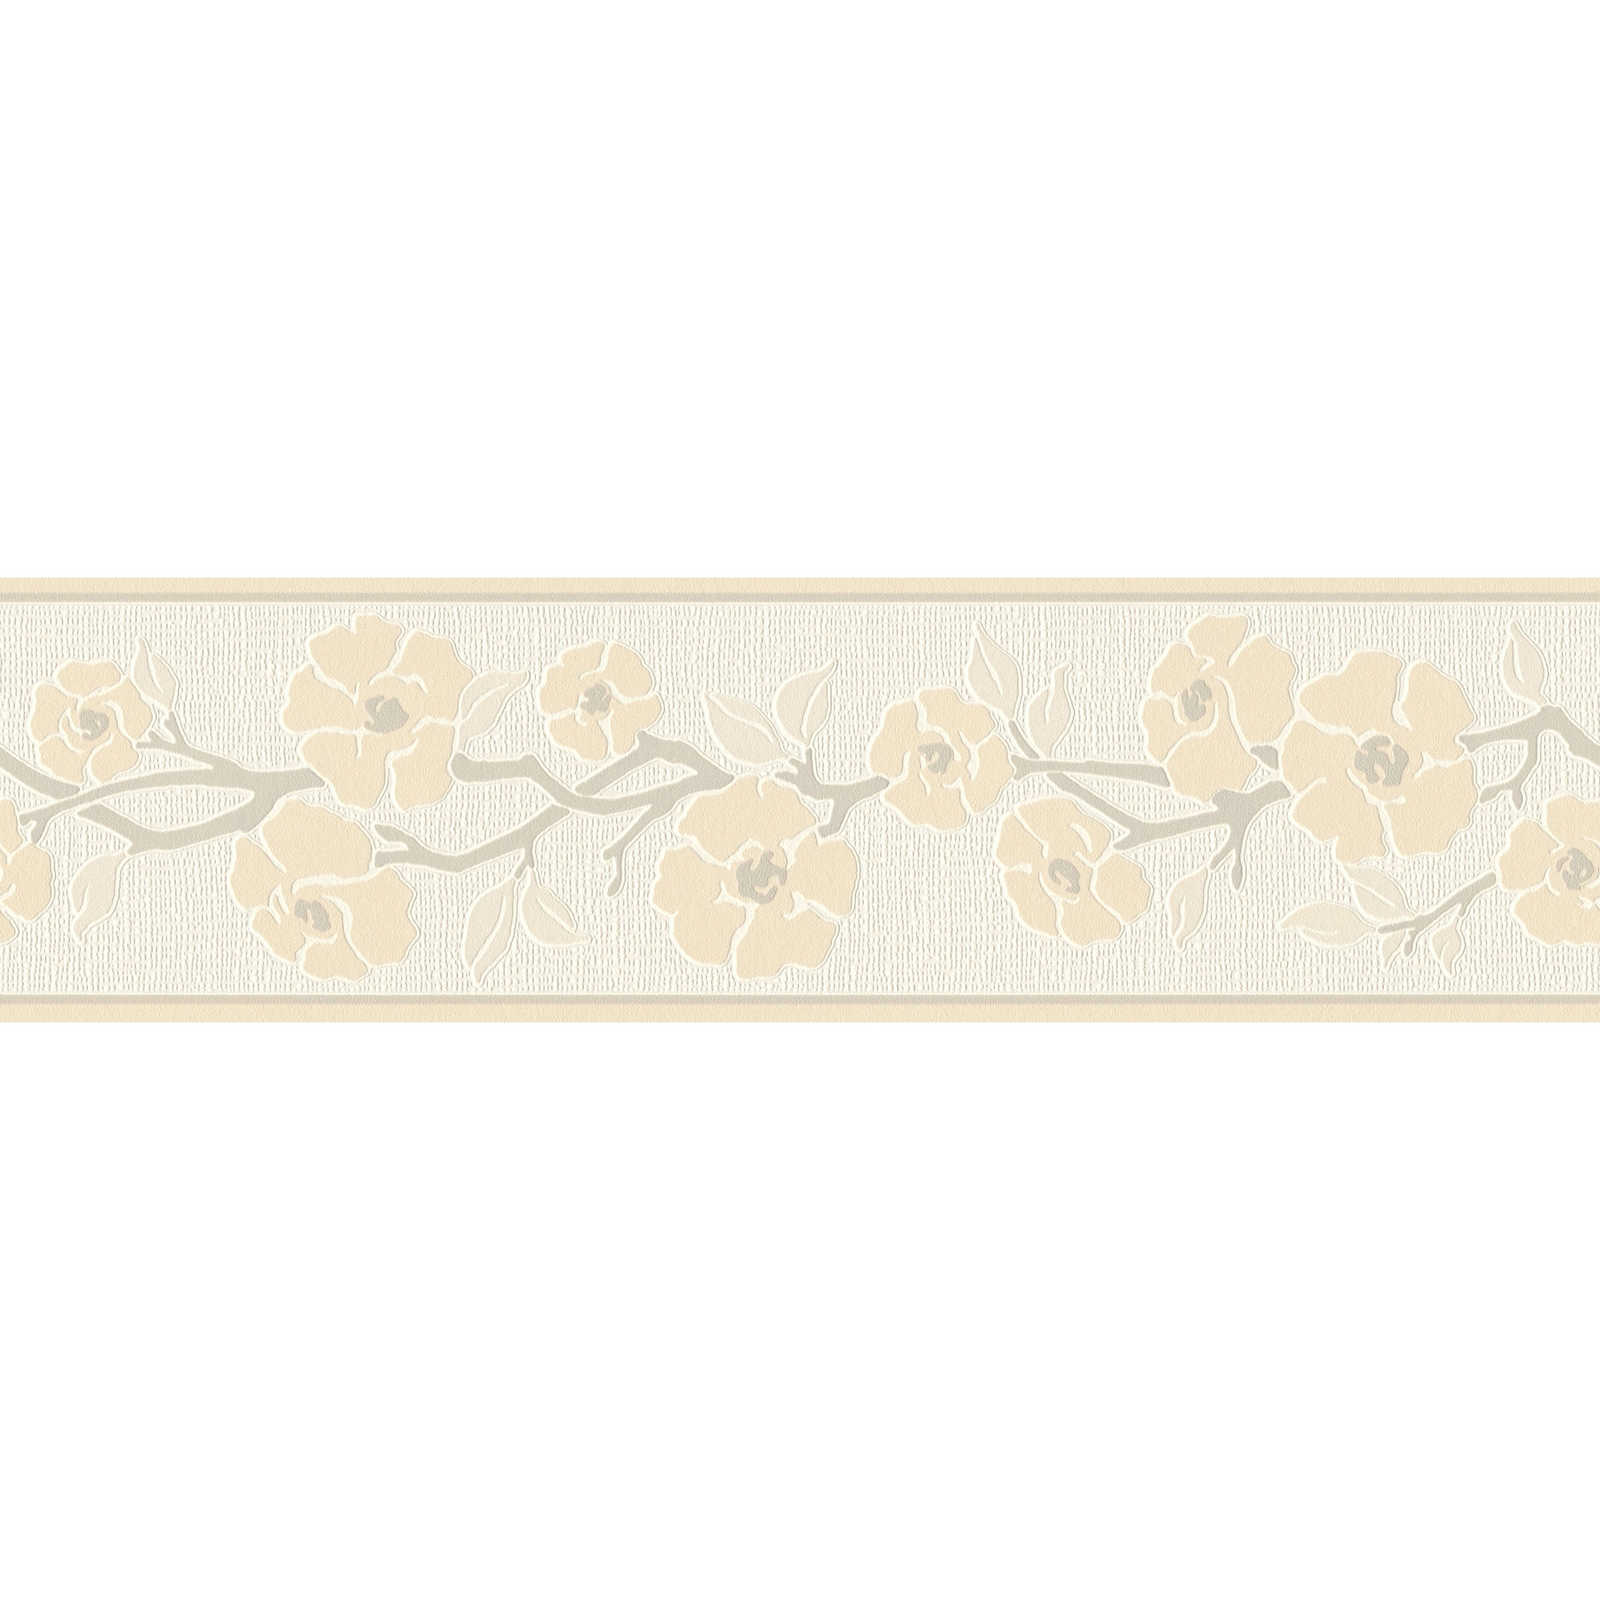 Vlies Bordüre: Pusteblume Romantische Blumenbordüre in Pastellfarben,  Optional Selbstklebend, Grundpreis 5,89 Euro/m 